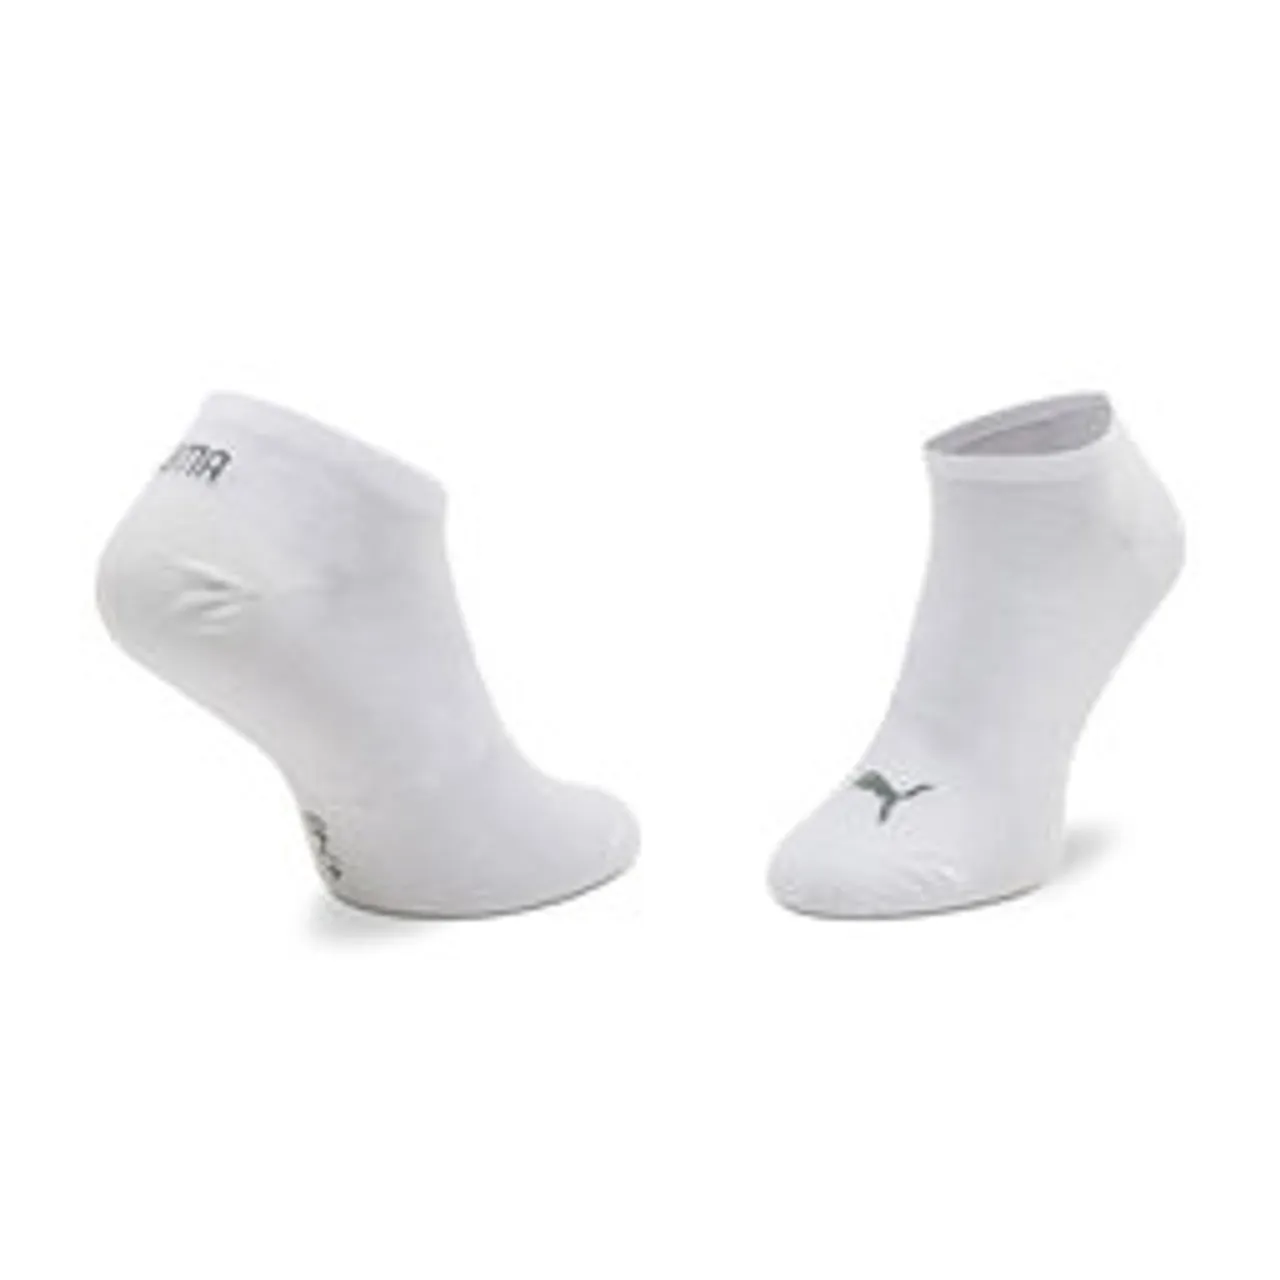 3er-Set niedrige Unisex-Socken Puma 261080001 Grey/White/Black 882